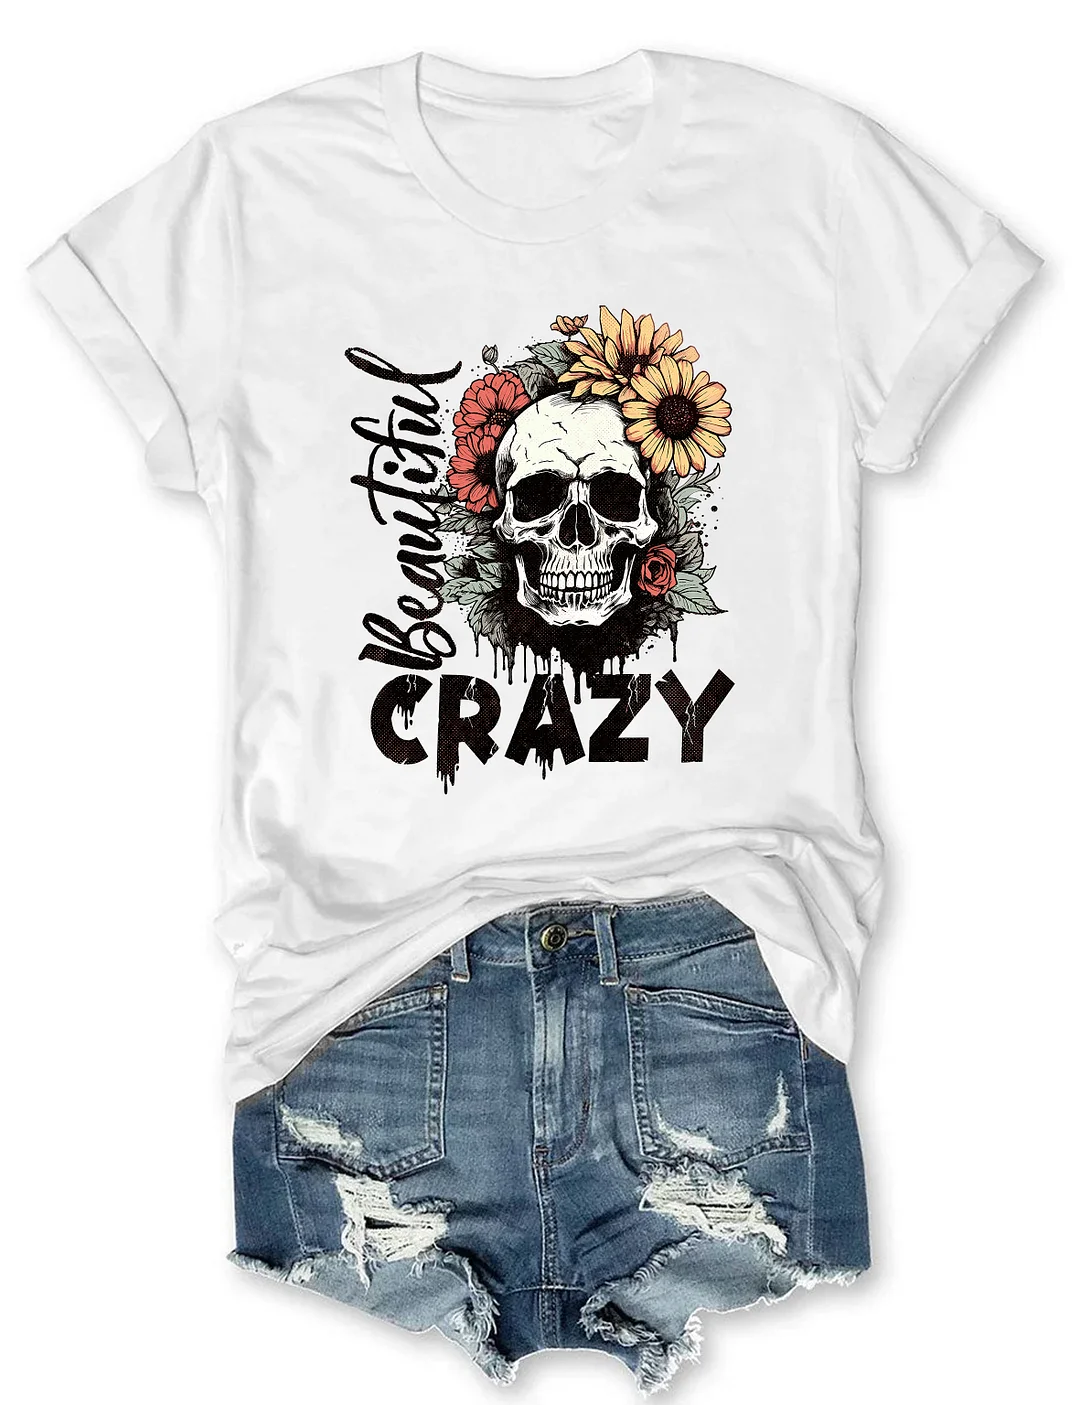 Beautiful Crazy T-shirt